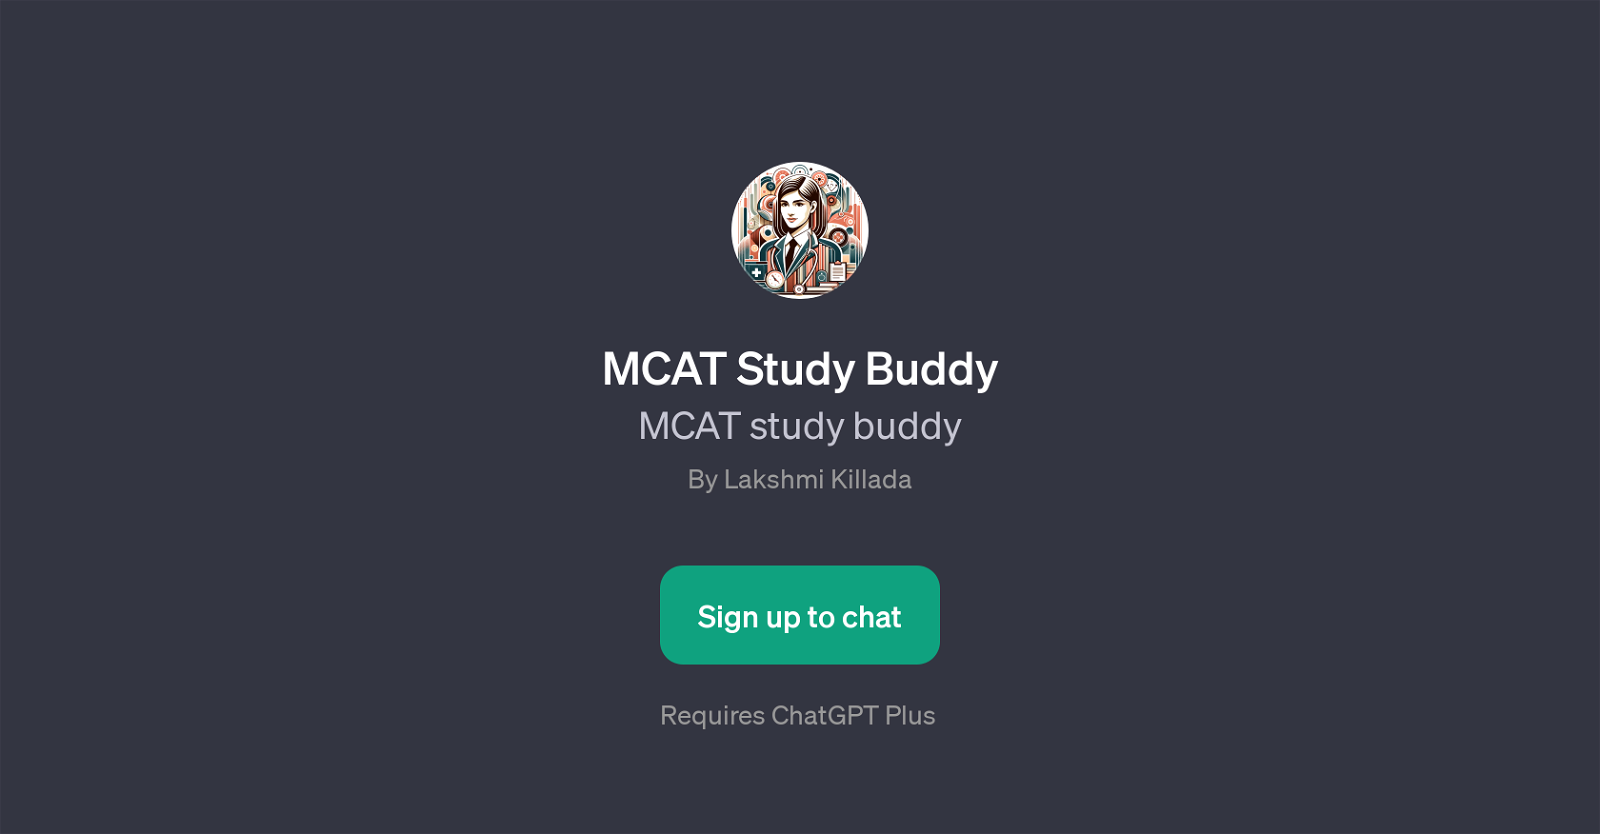 MCAT Study Buddy website